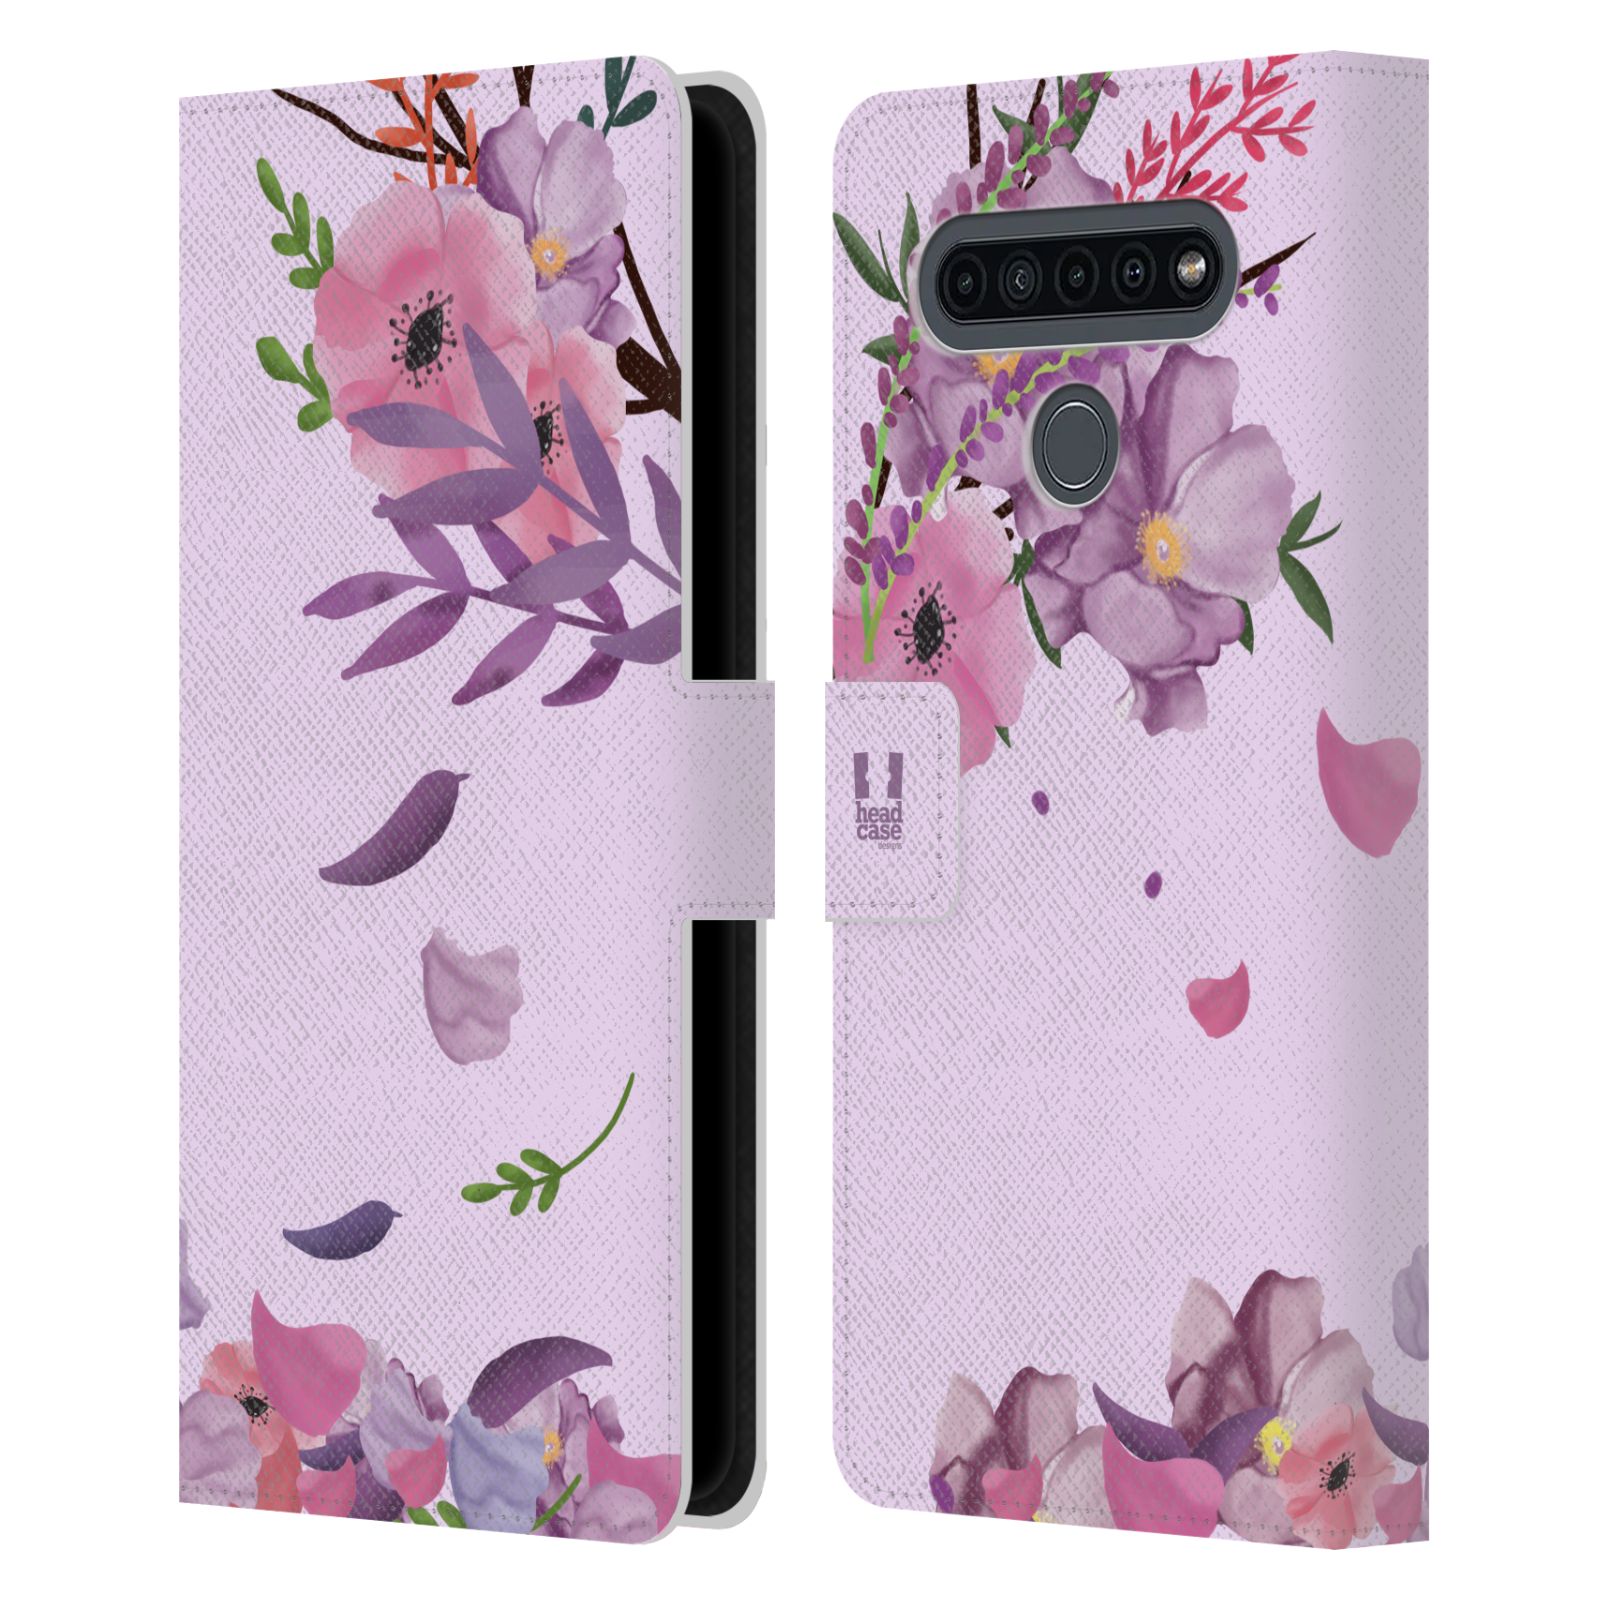 Pouzdro na mobil LG K41s  - HEAD CASE - Rozkvetlé růže a listy růžová